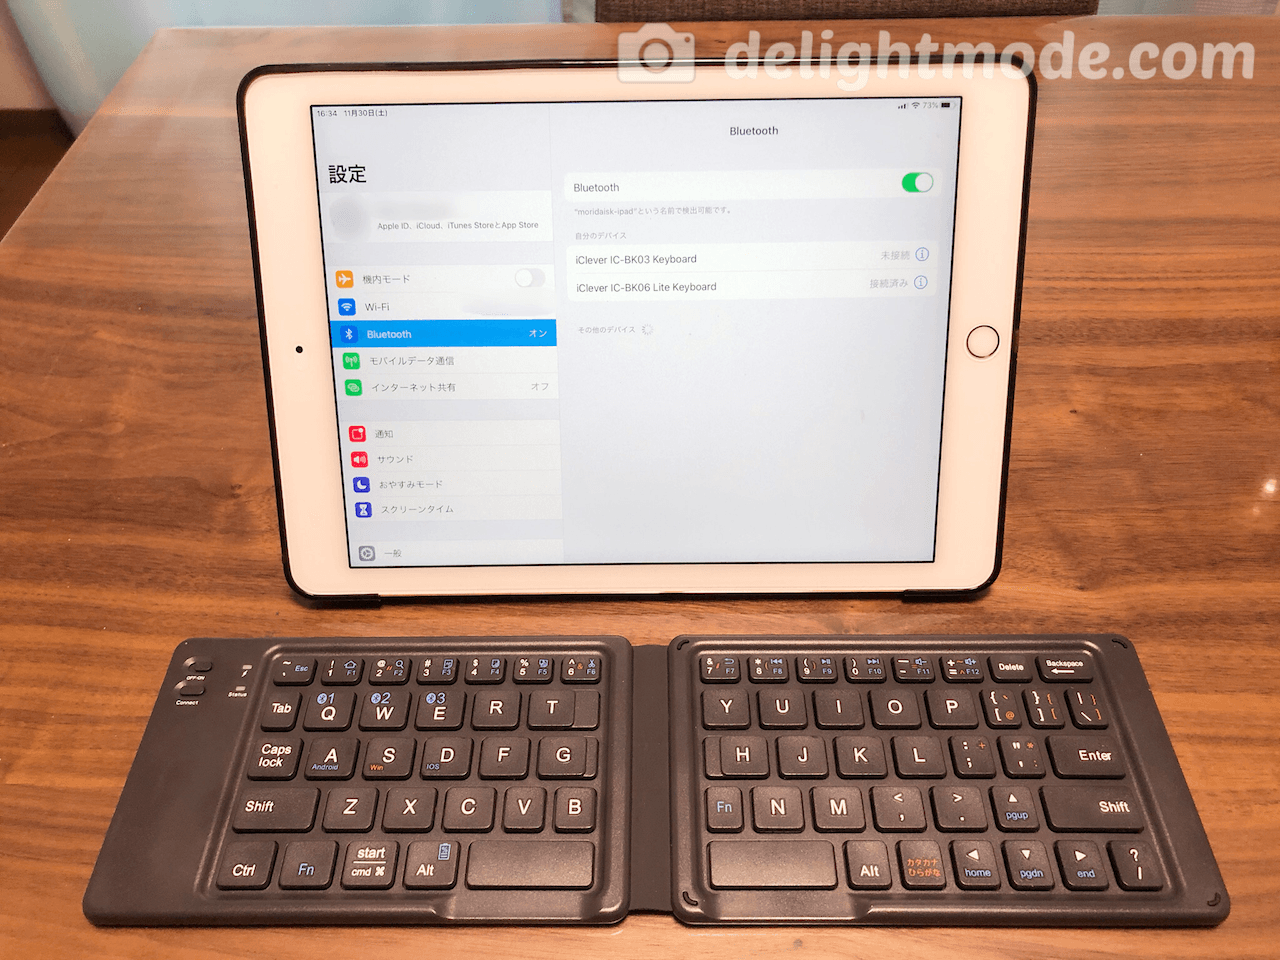 「iClever IC-BK06 Lite」BluetoothキーボードをiPadに接続したところの写真です。